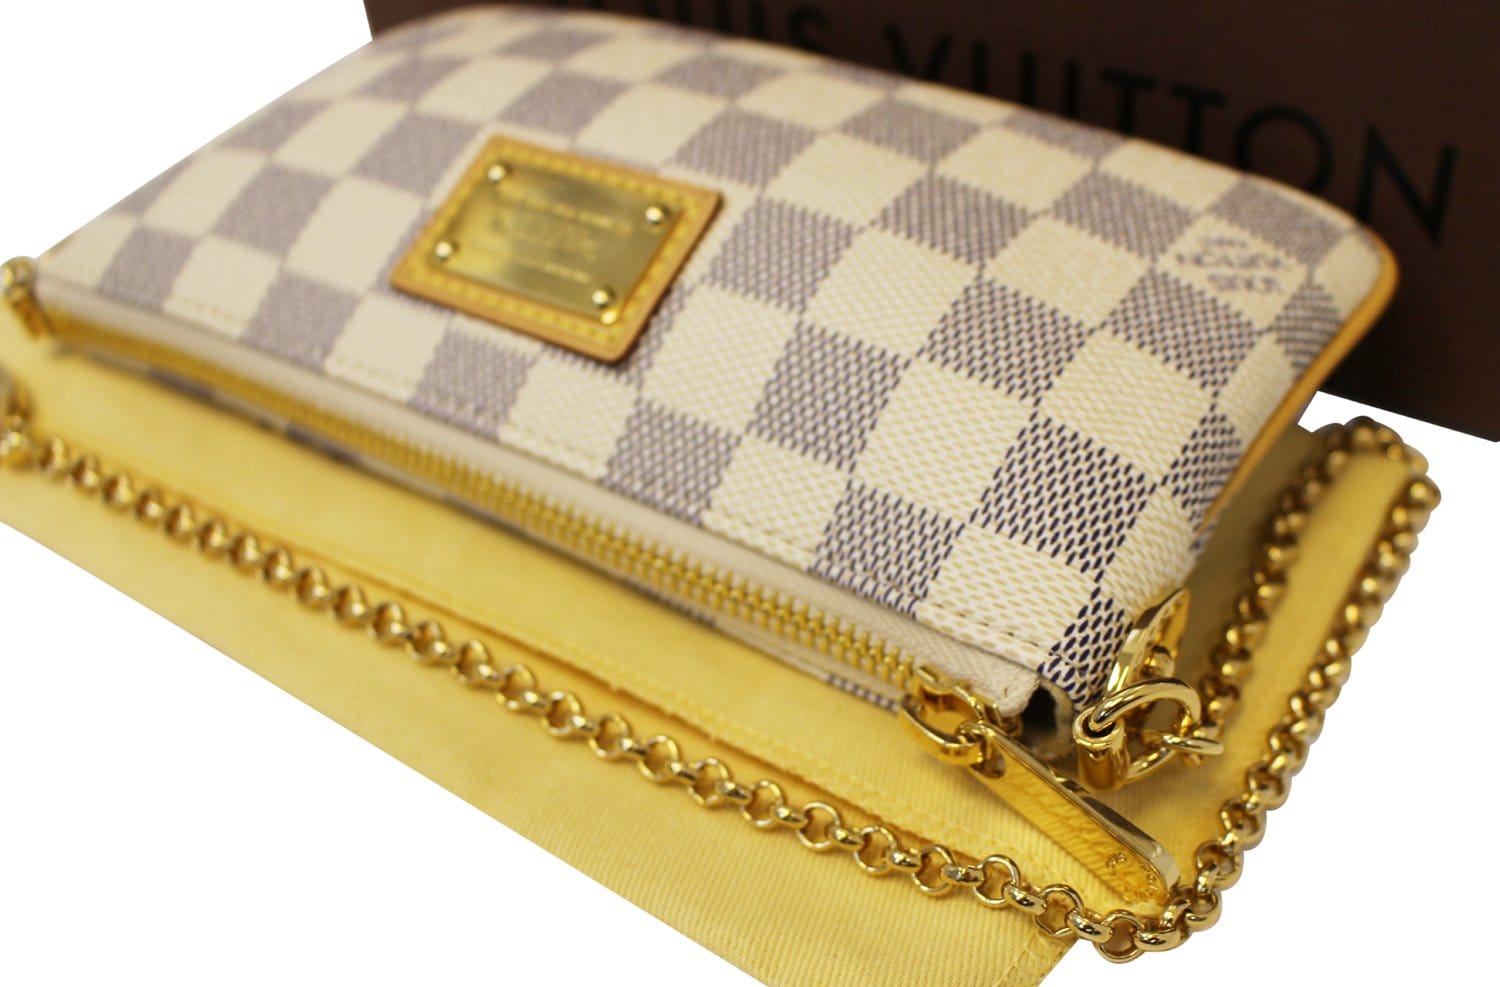 Louis Vuitton Pochette Milla MM White Azur Damier Canvas Bag at